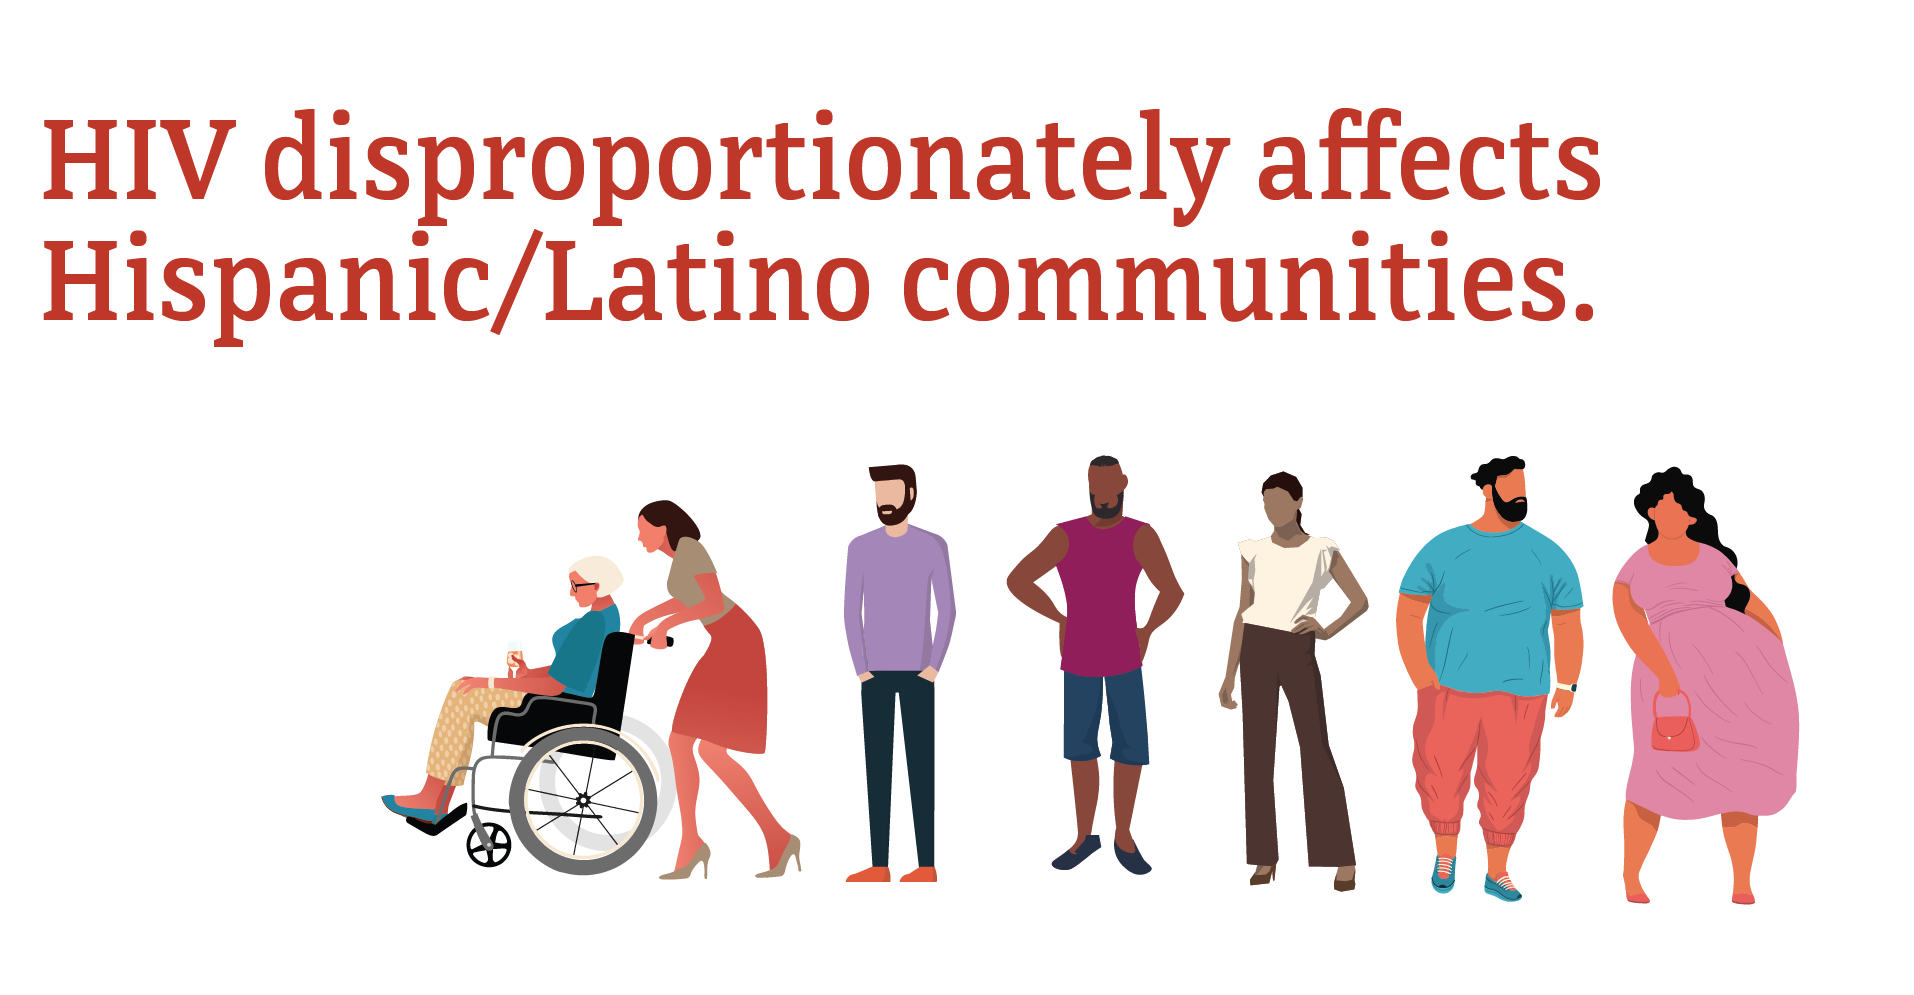 HIV disproportionately affects Hispanic/Latino communities.